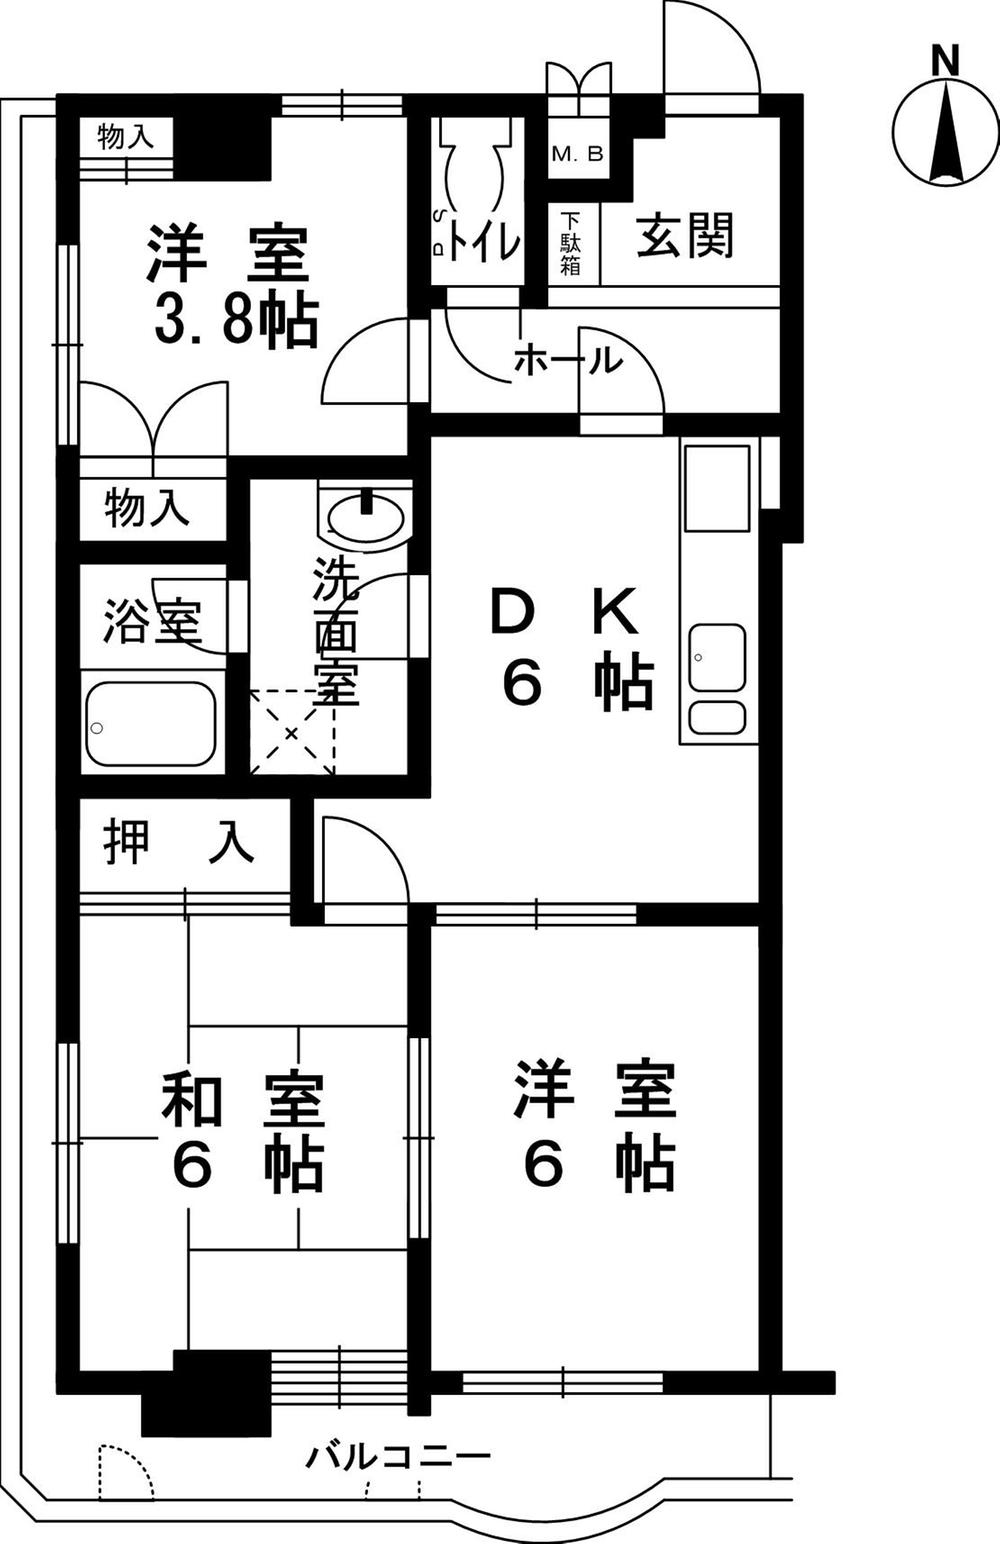 Floor plan. 3DK, Price 12.8 million yen, Occupied area 51.33 sq m , Balcony area 10.18 sq m